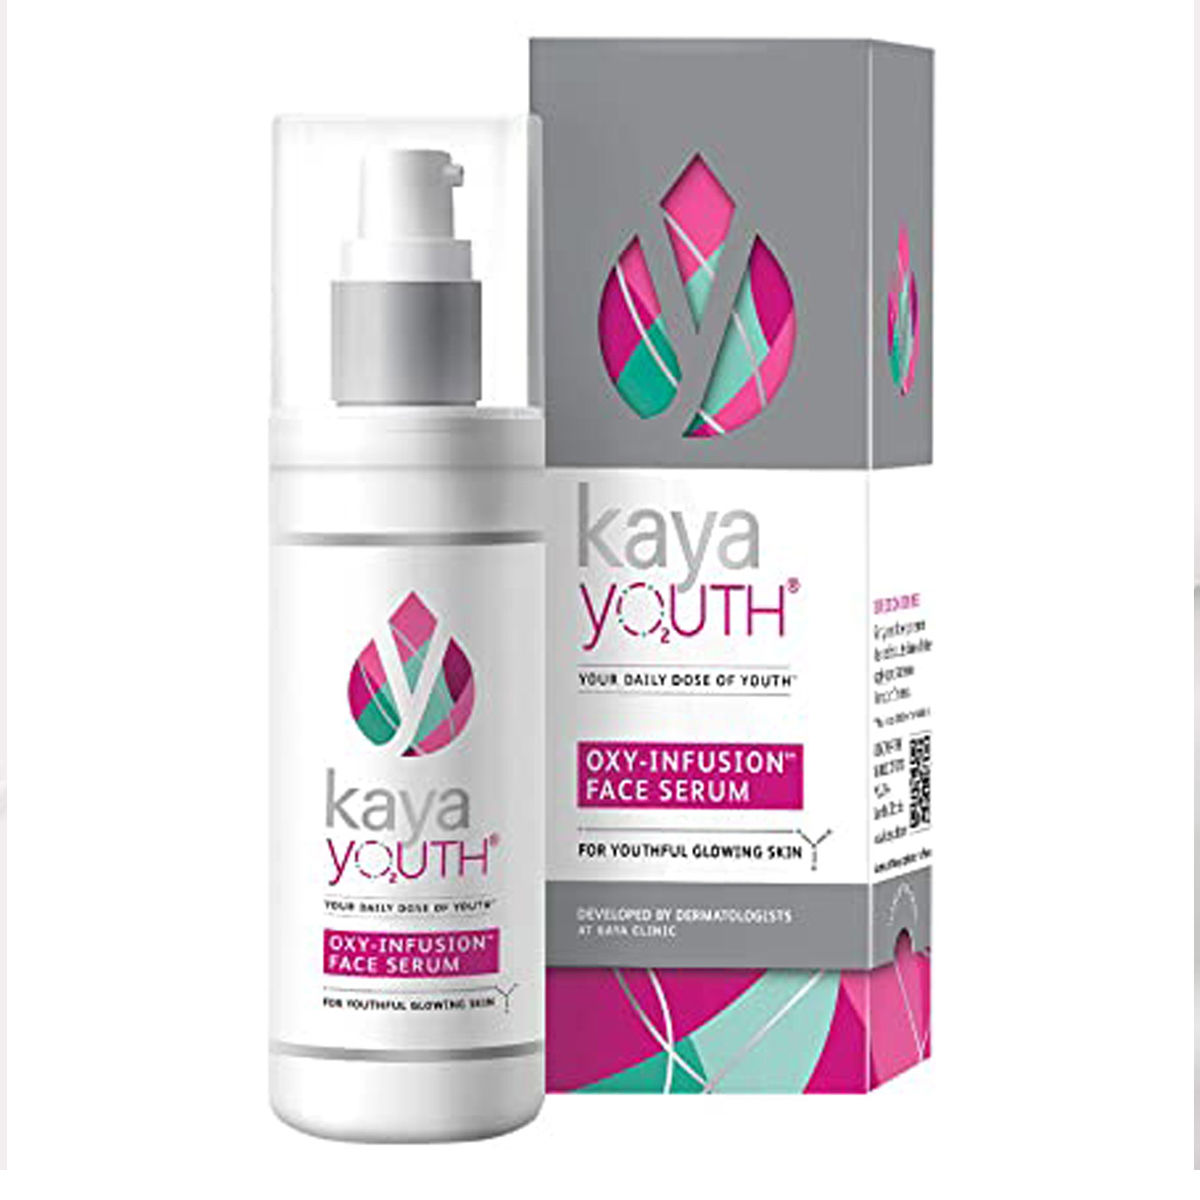 Buy Kaya Youth Oxy-Infusion Face Serum, 50 ml Online